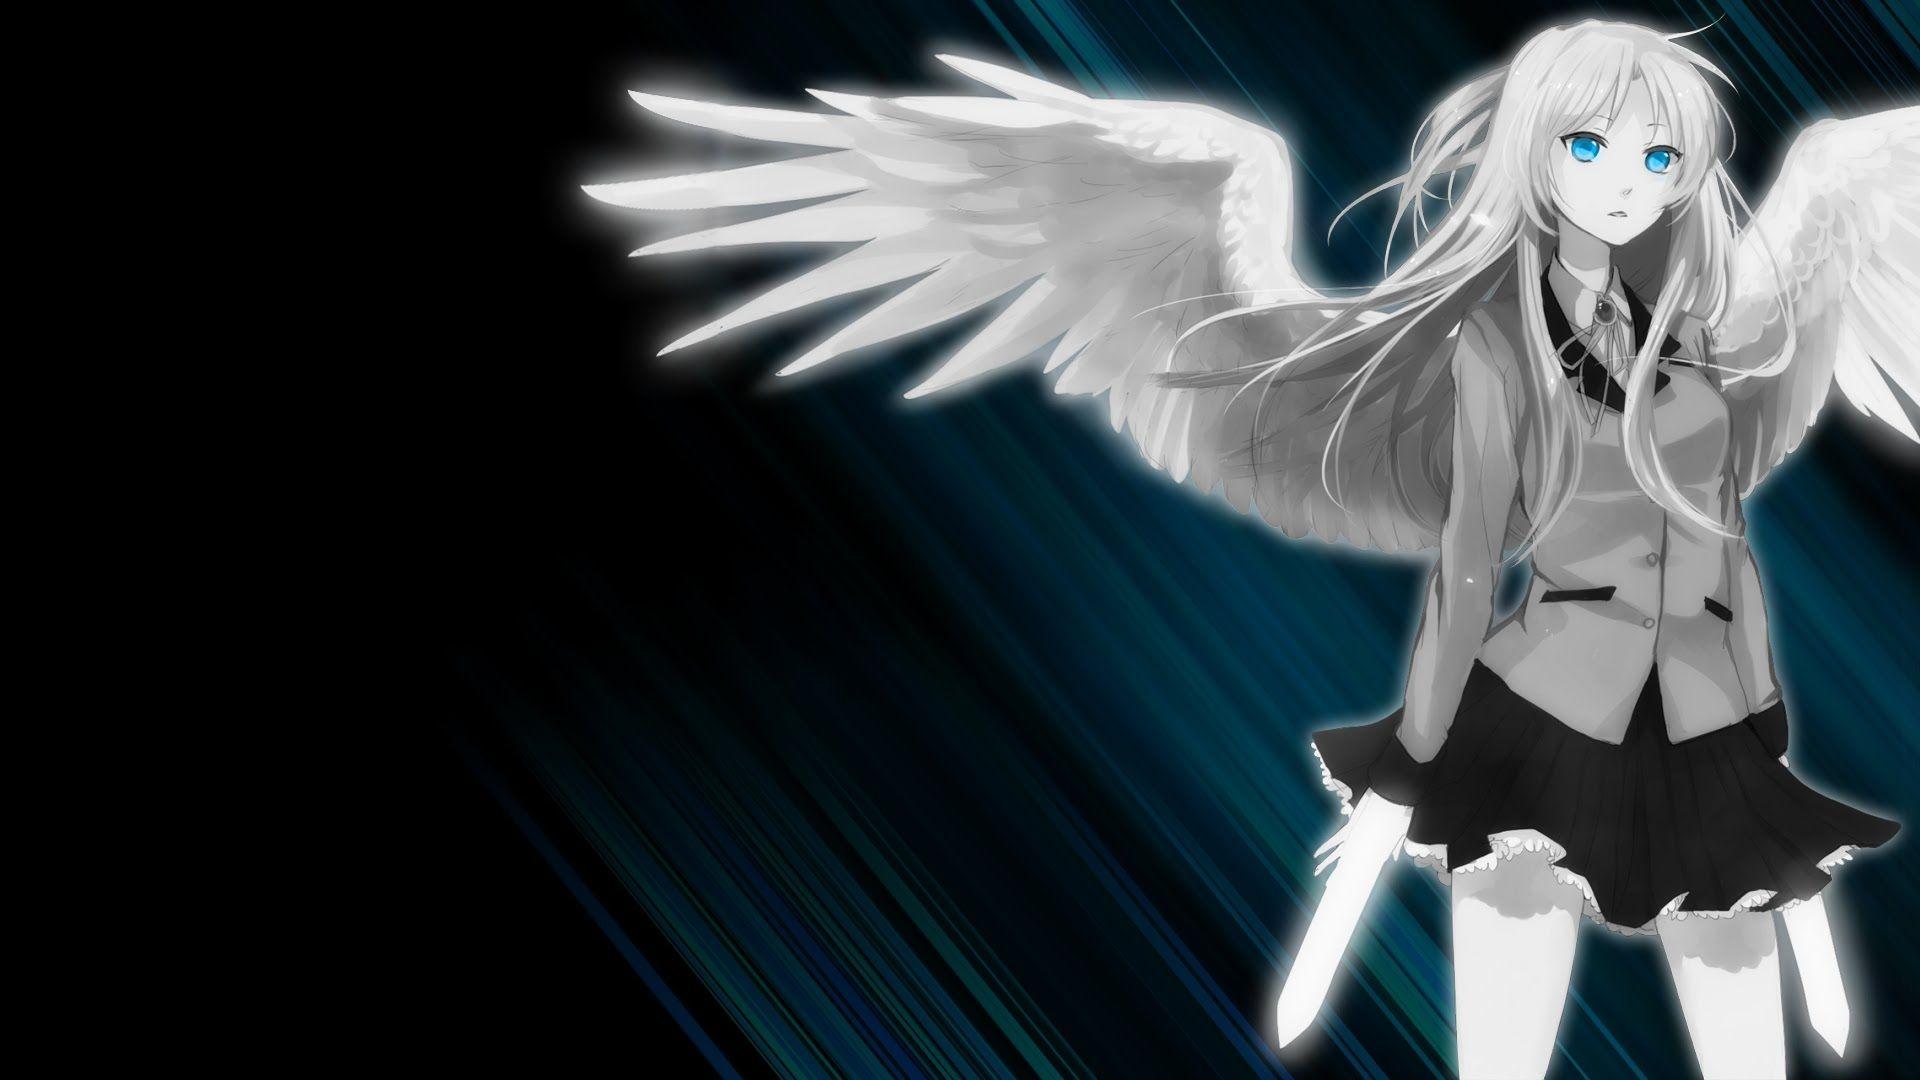 Anime Girl Fallen Angel 4K wallpaper download